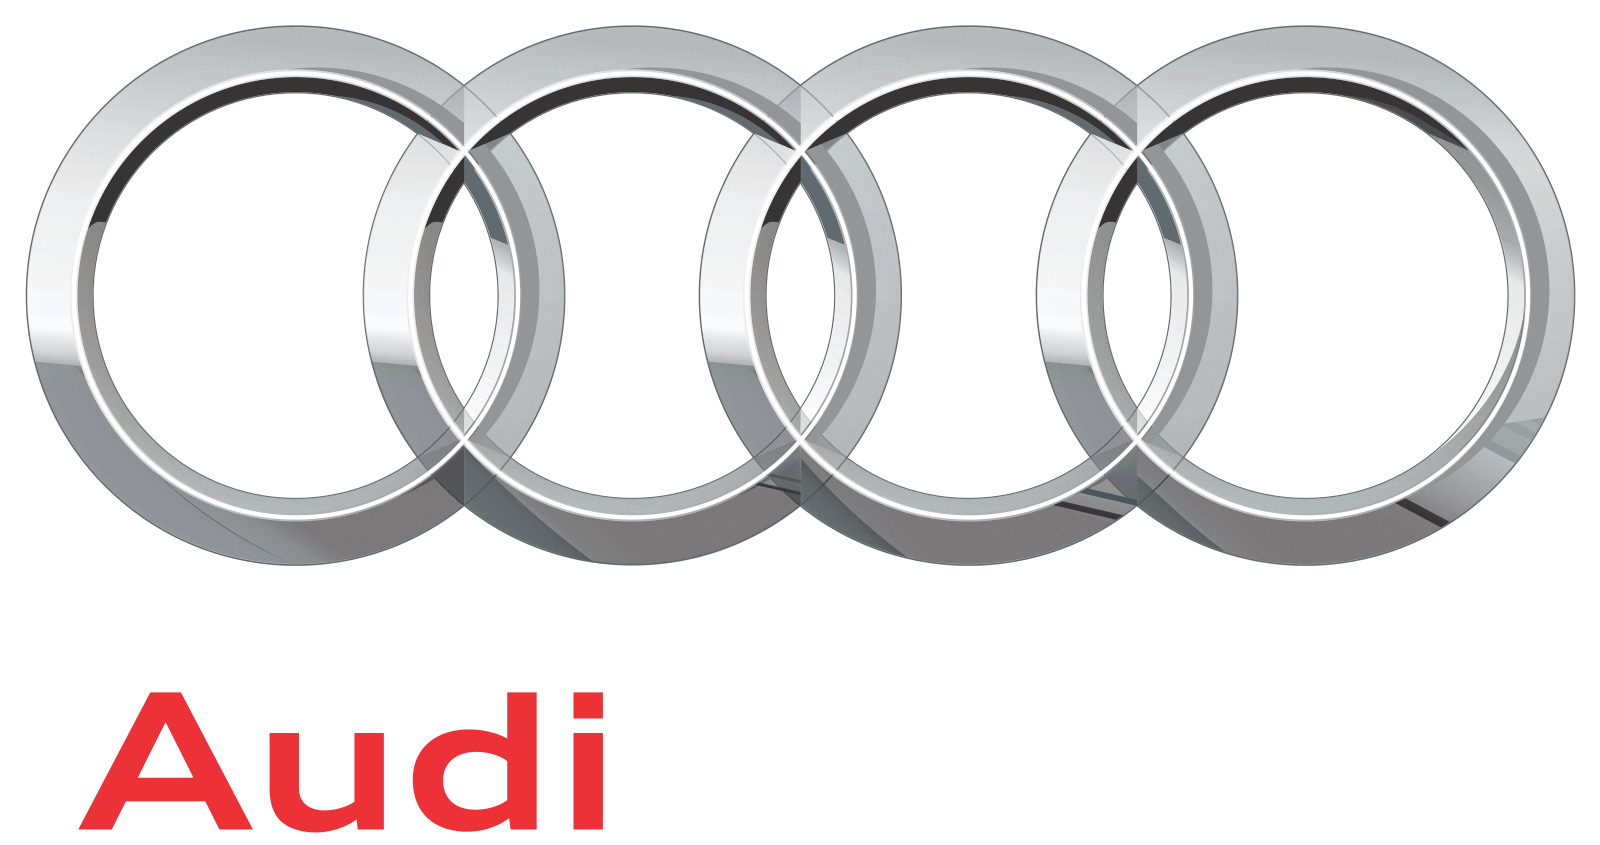 audi logo 2 - Audi Logo